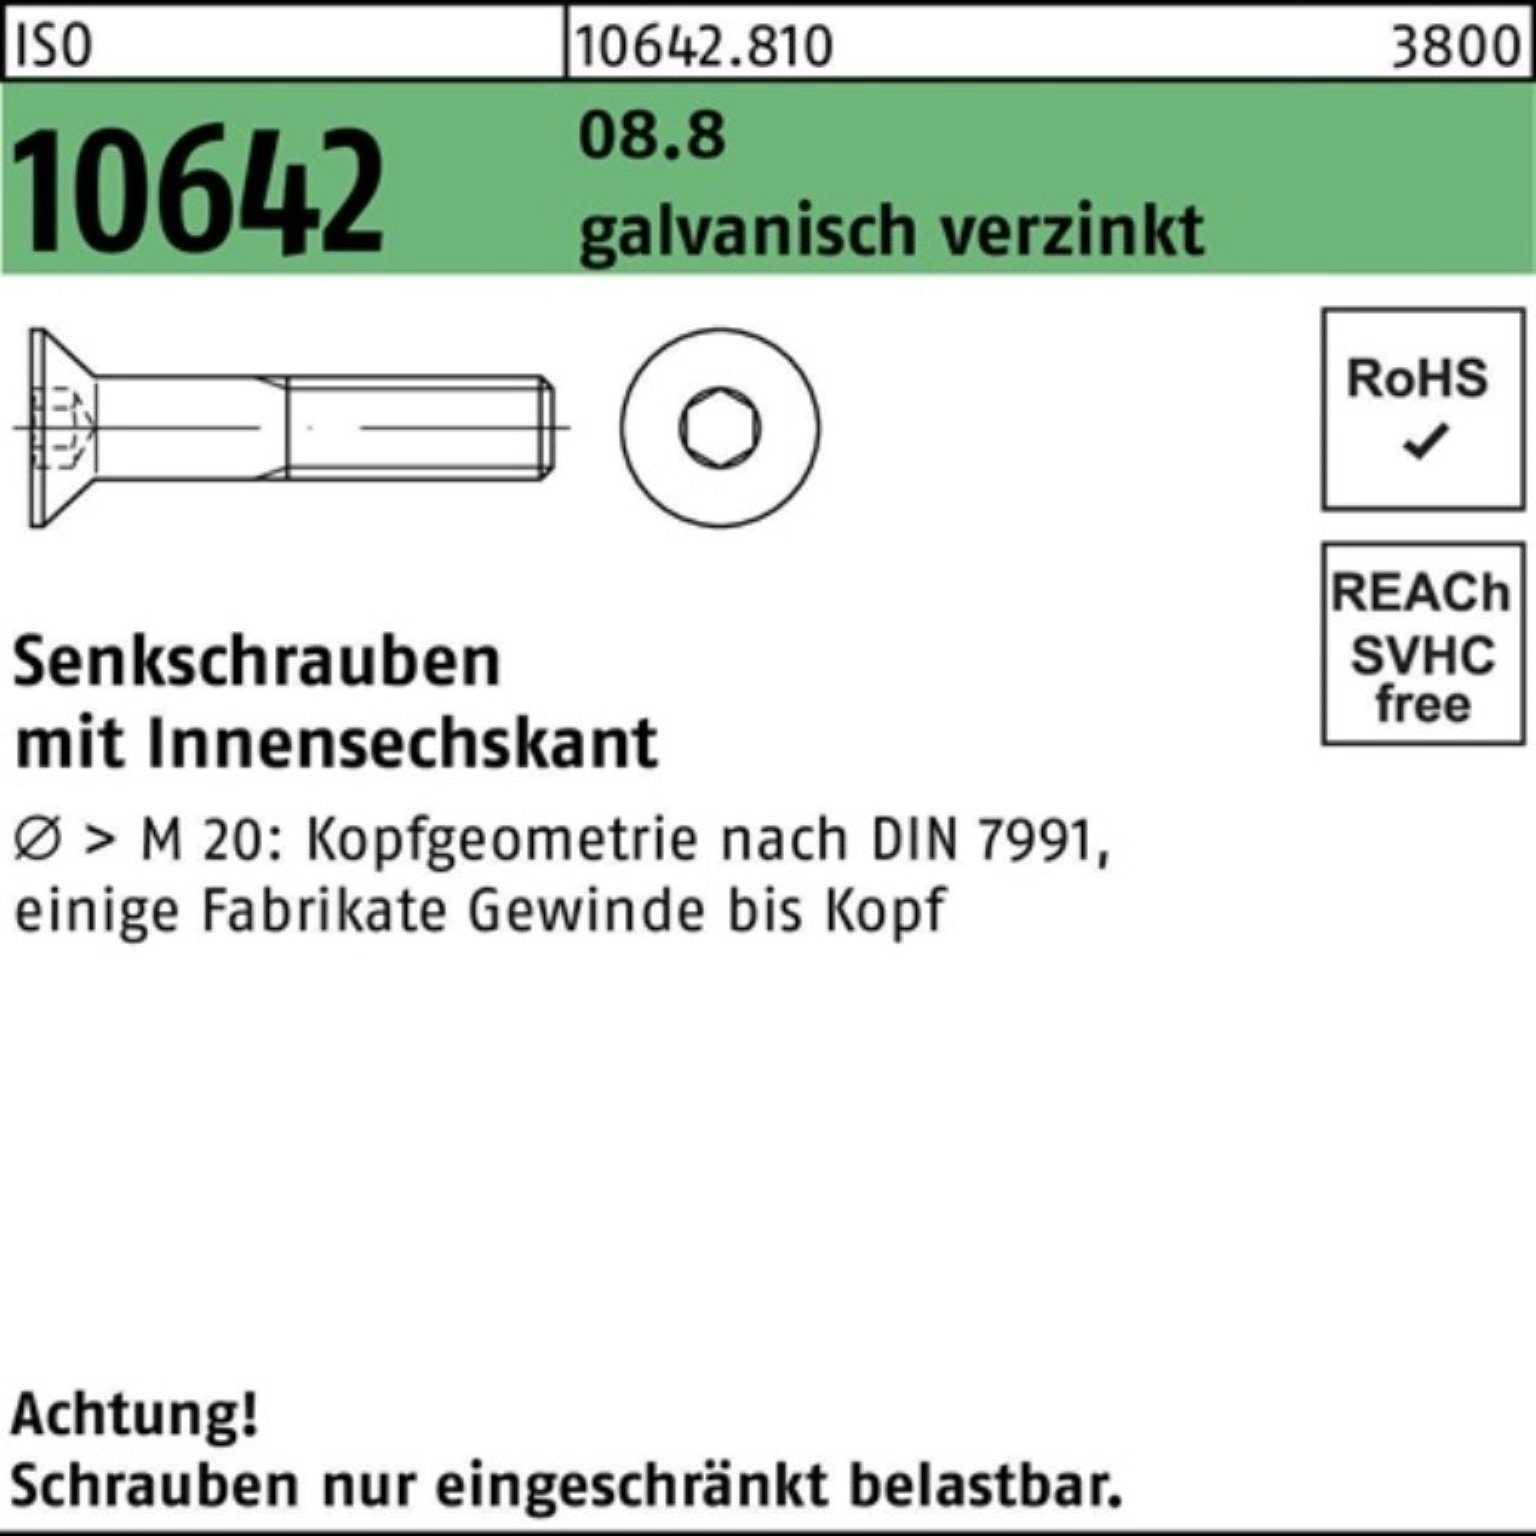 Reyher Senkschraube 200er Pack Senkschraube ISO 10642 Innen-6kt M8x 16 8.8 galv.verz. 200